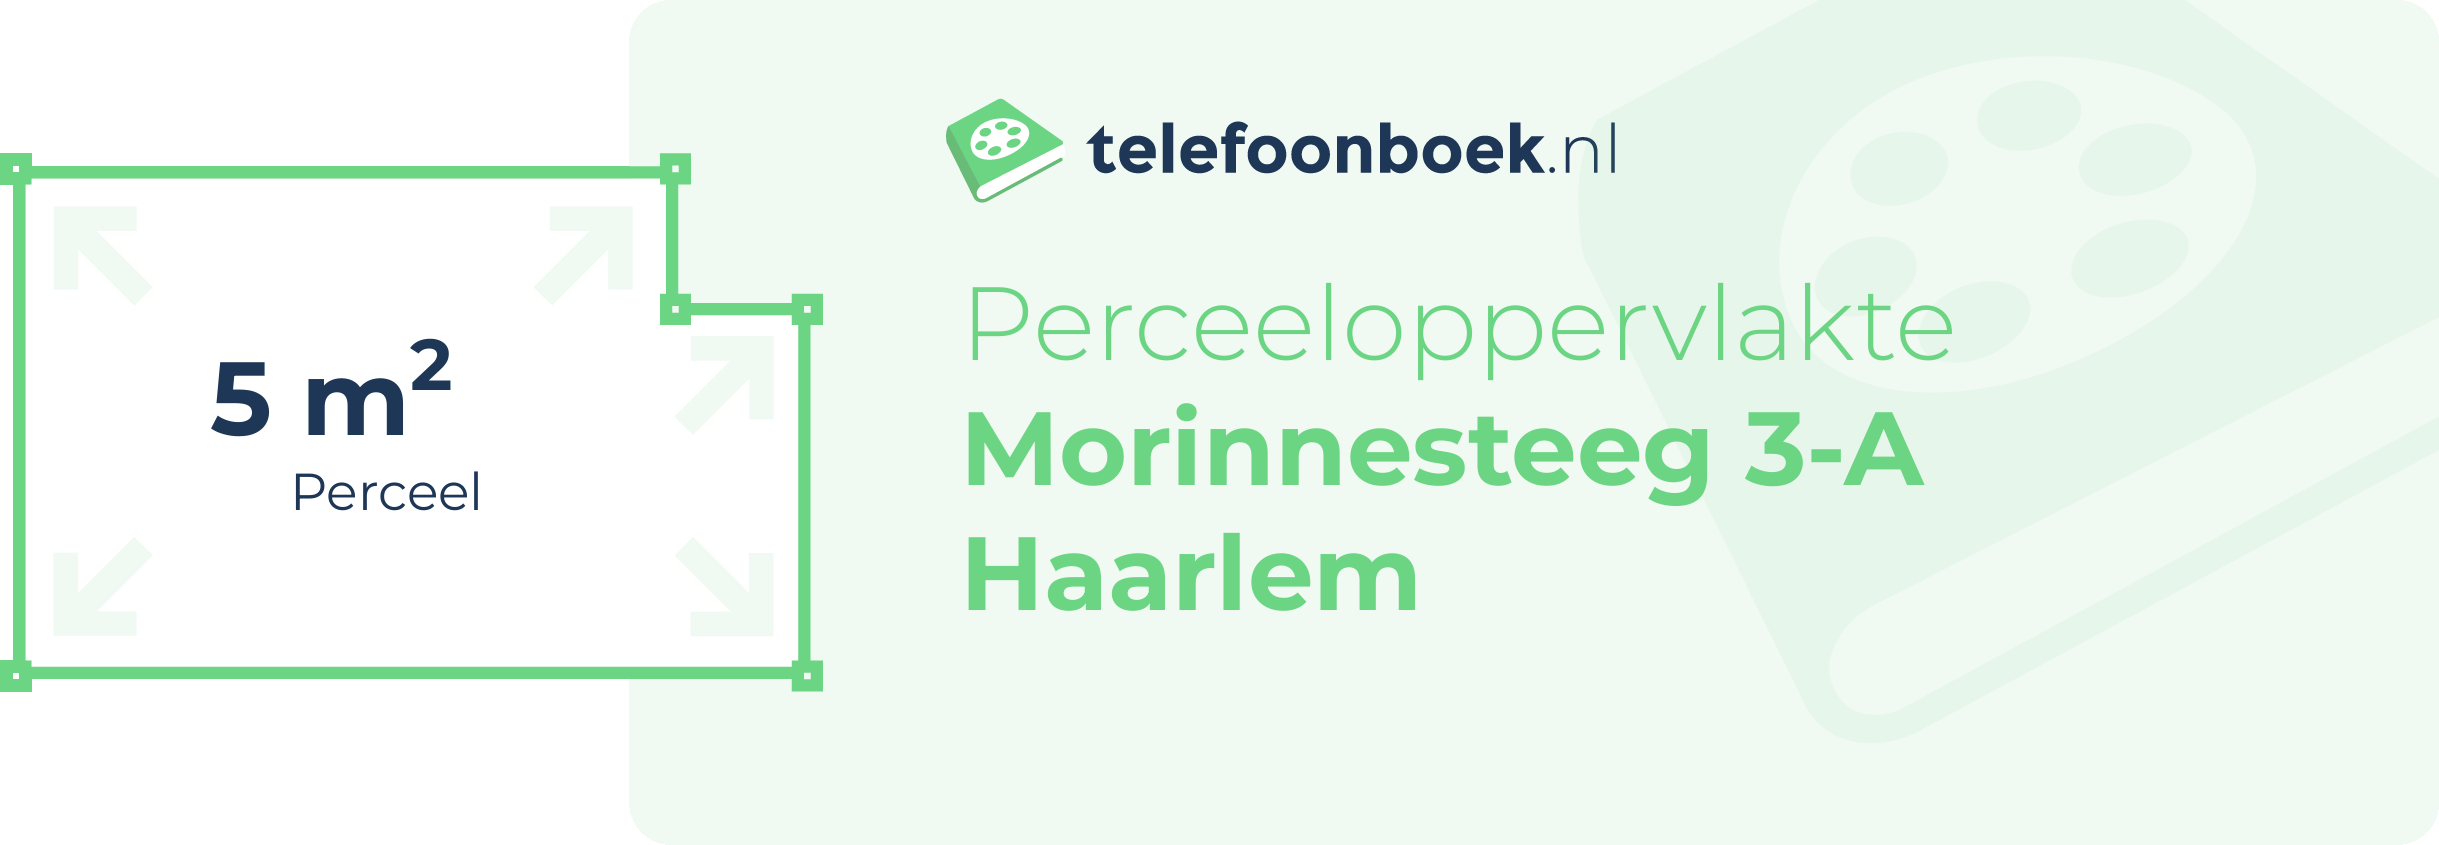 Perceeloppervlakte Morinnesteeg 3-A Haarlem